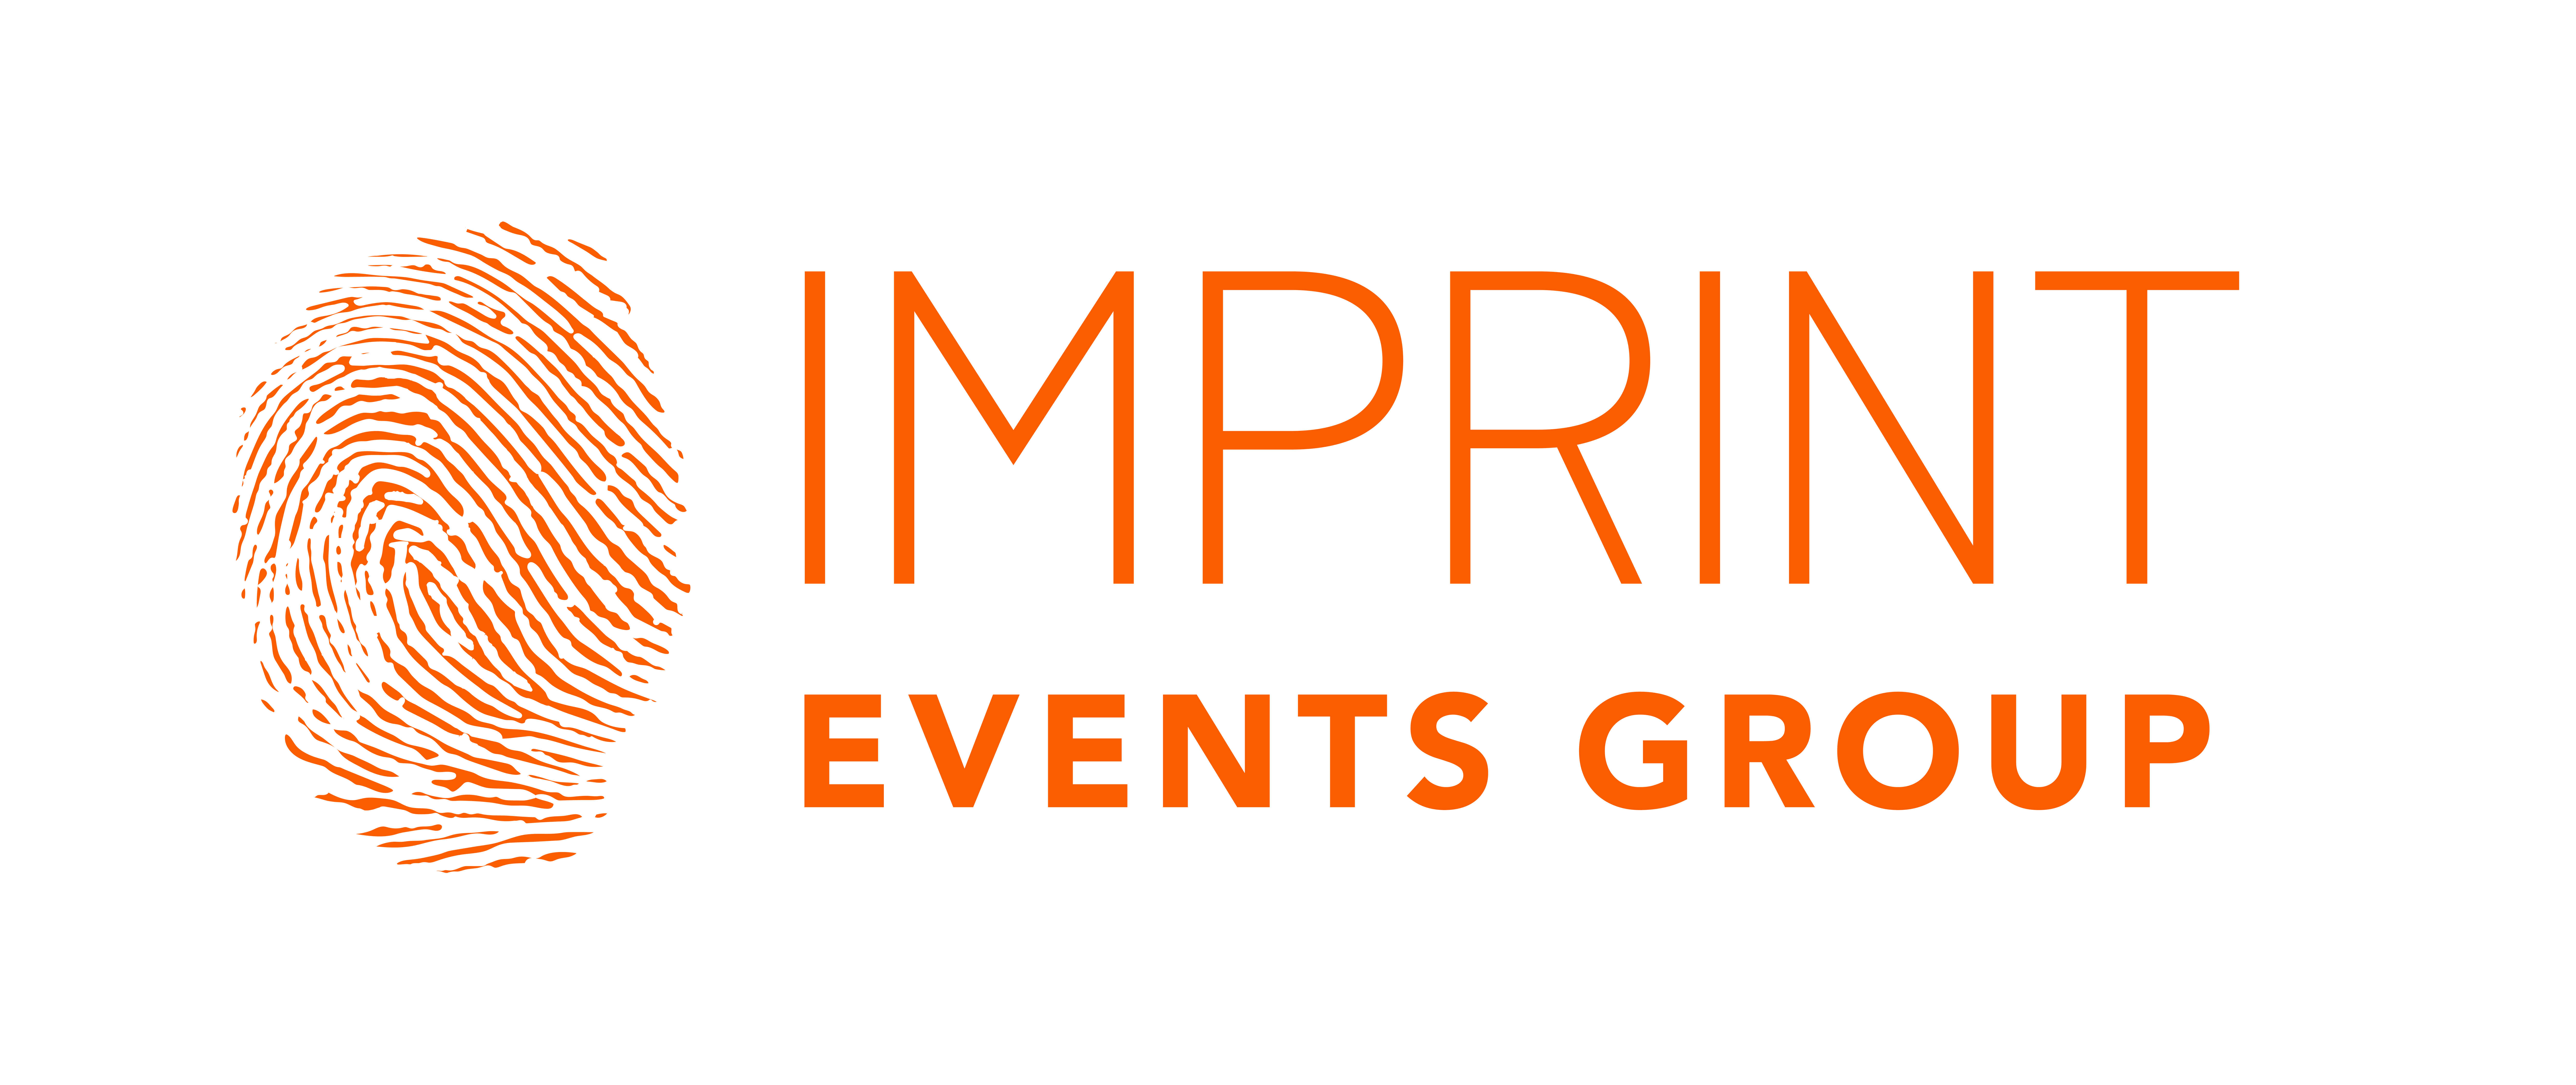 IMPRINT EVENTS GROUP_LOGO_IMPRINT EVENTS GROUP_LOGO_BLAZE 